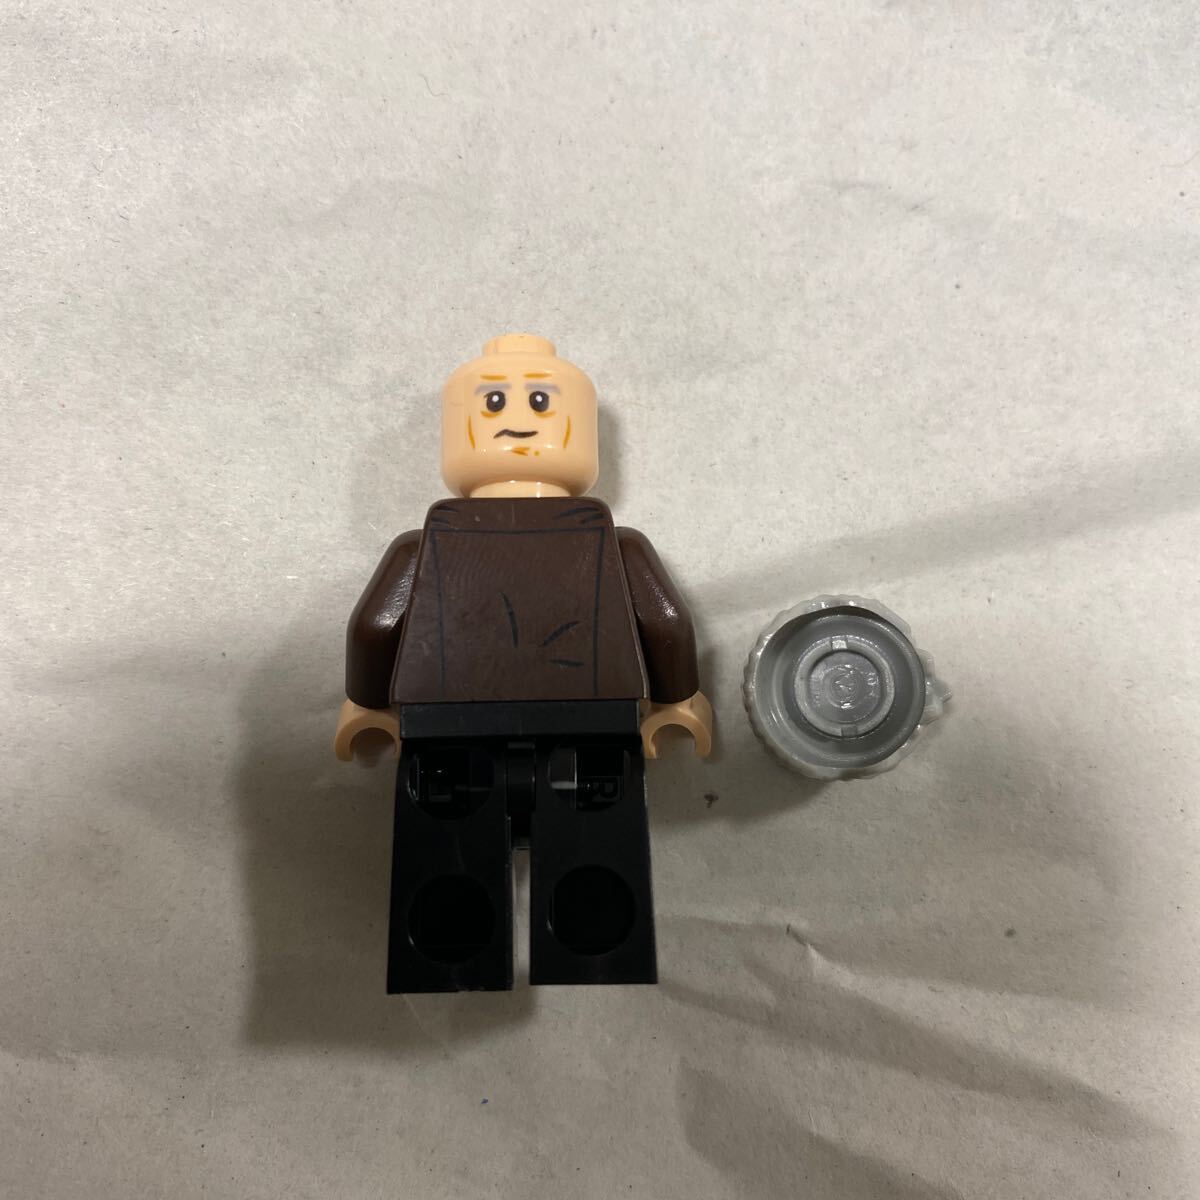  Lego Звездные войны мини фигурка Lego Star * War z Mini fig рукоятка * Solo (75105)